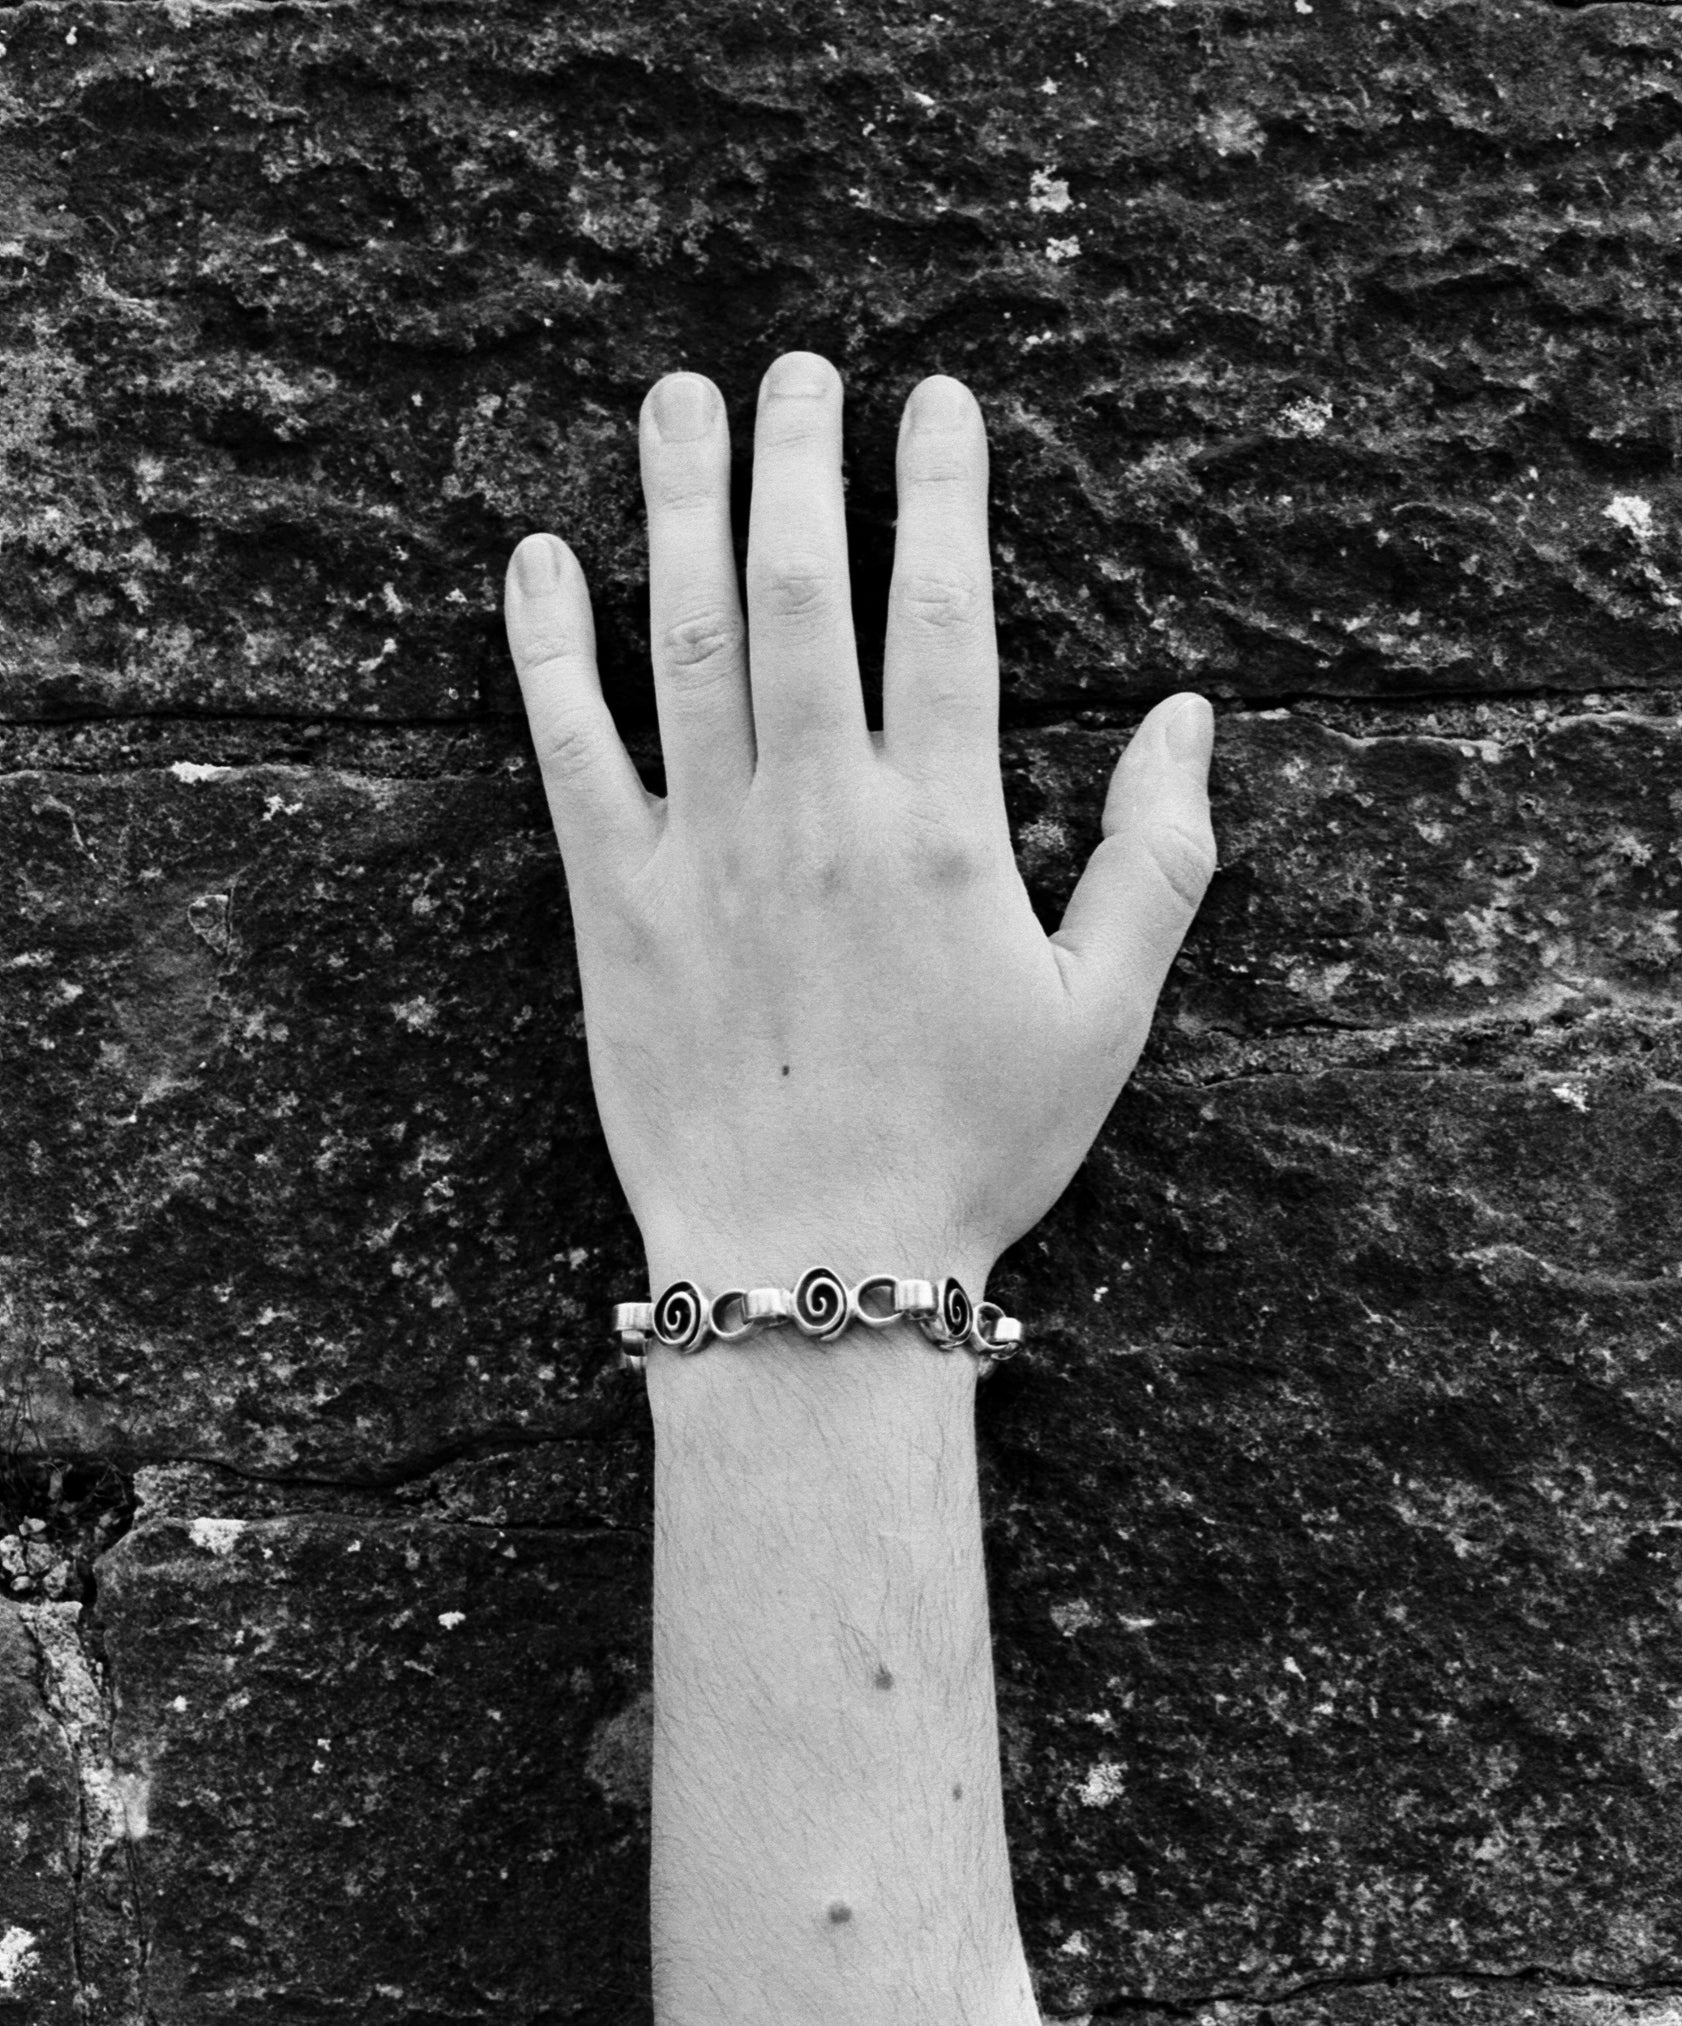 DYRBERG/KERN Spiral Chain Bracelet